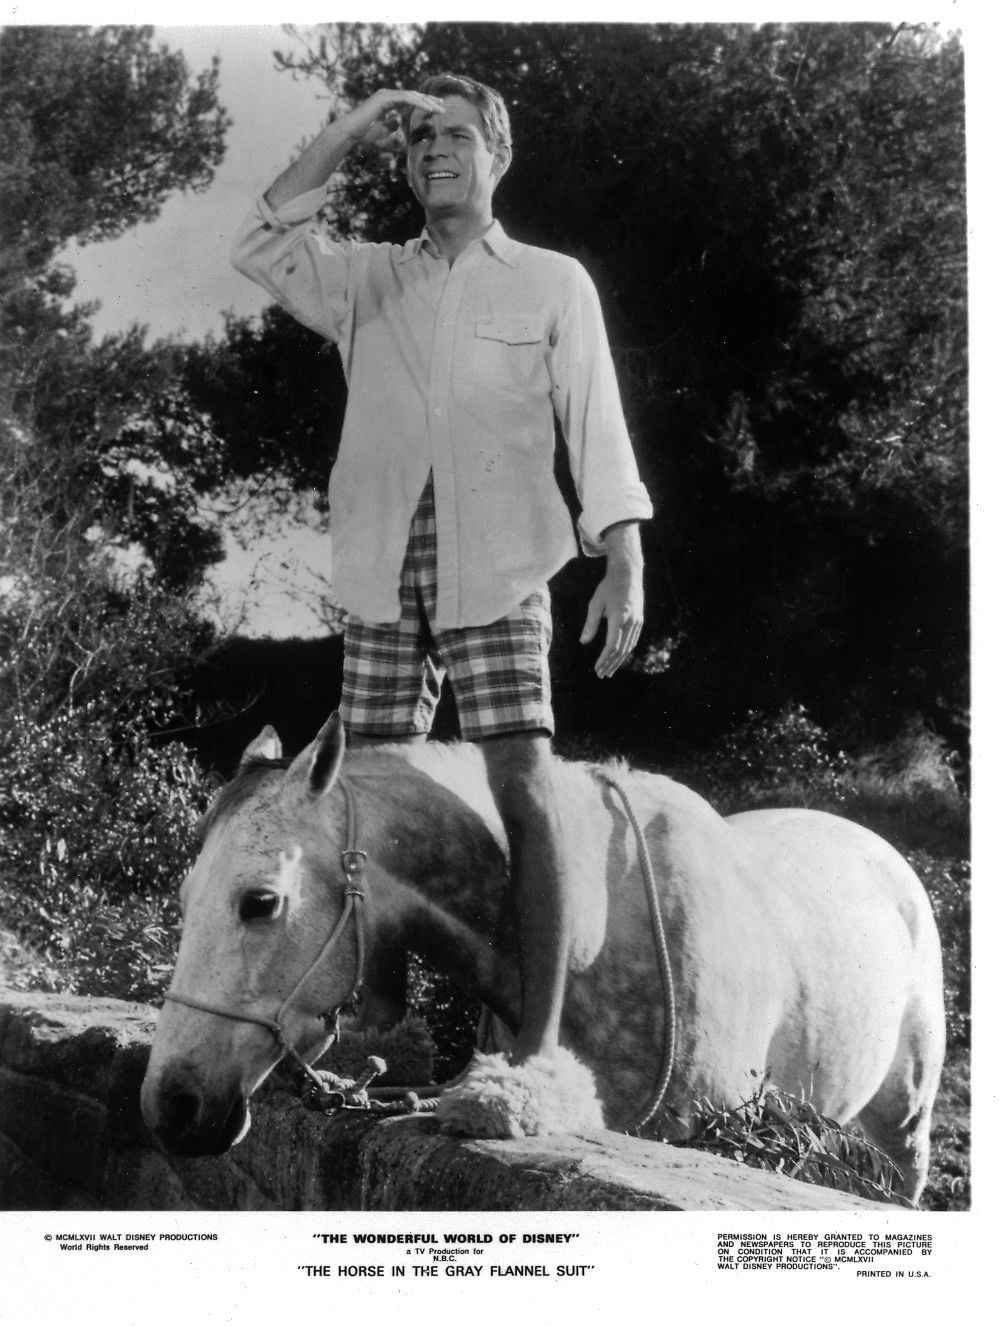  فیلم سینمایی The Horse in the Gray Flannel Suit با حضور Dean Jones